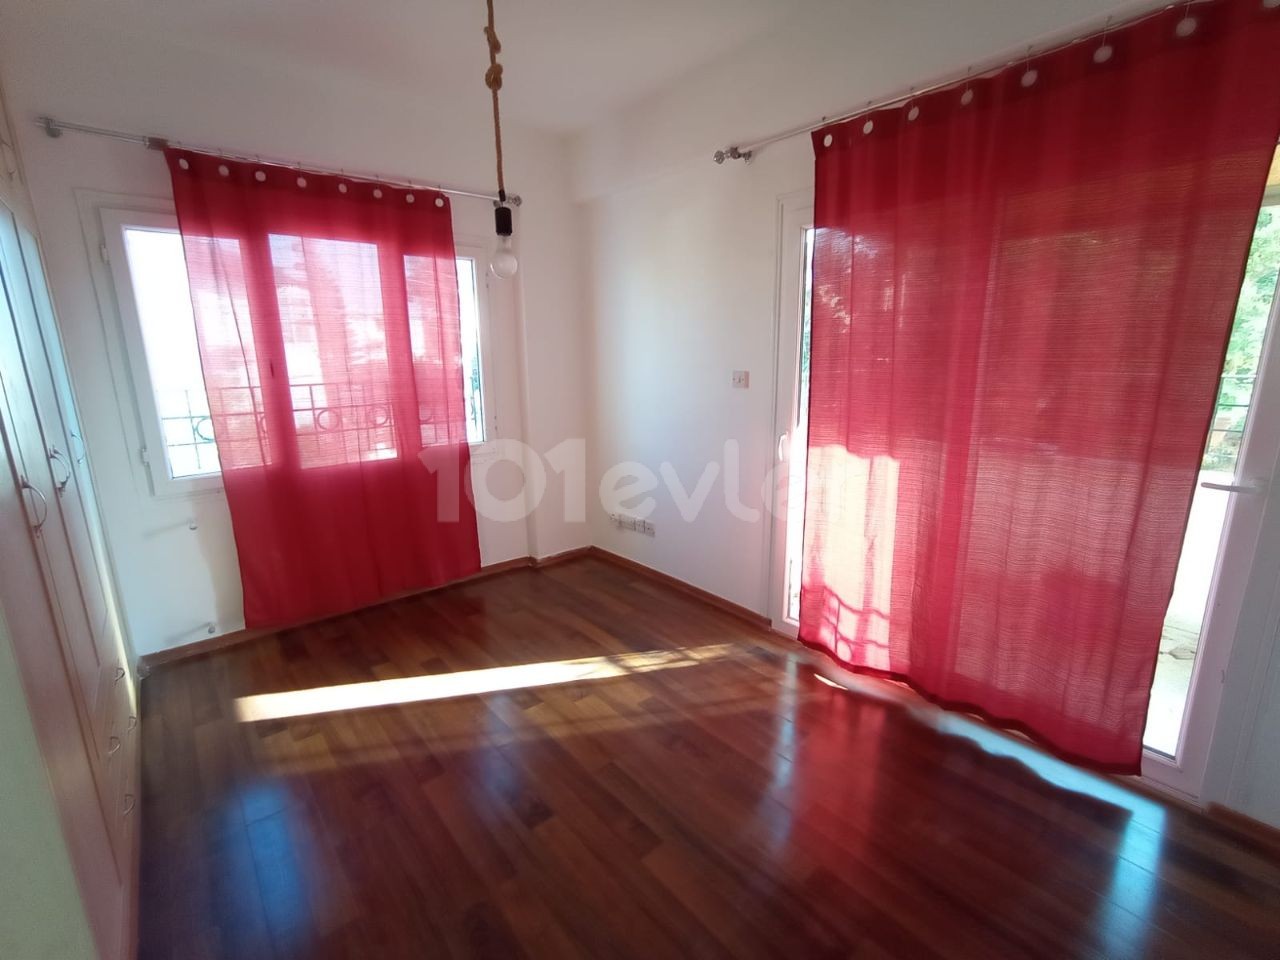 3-bedroom mezzanine Decked Turkish apartment is for sale ** 